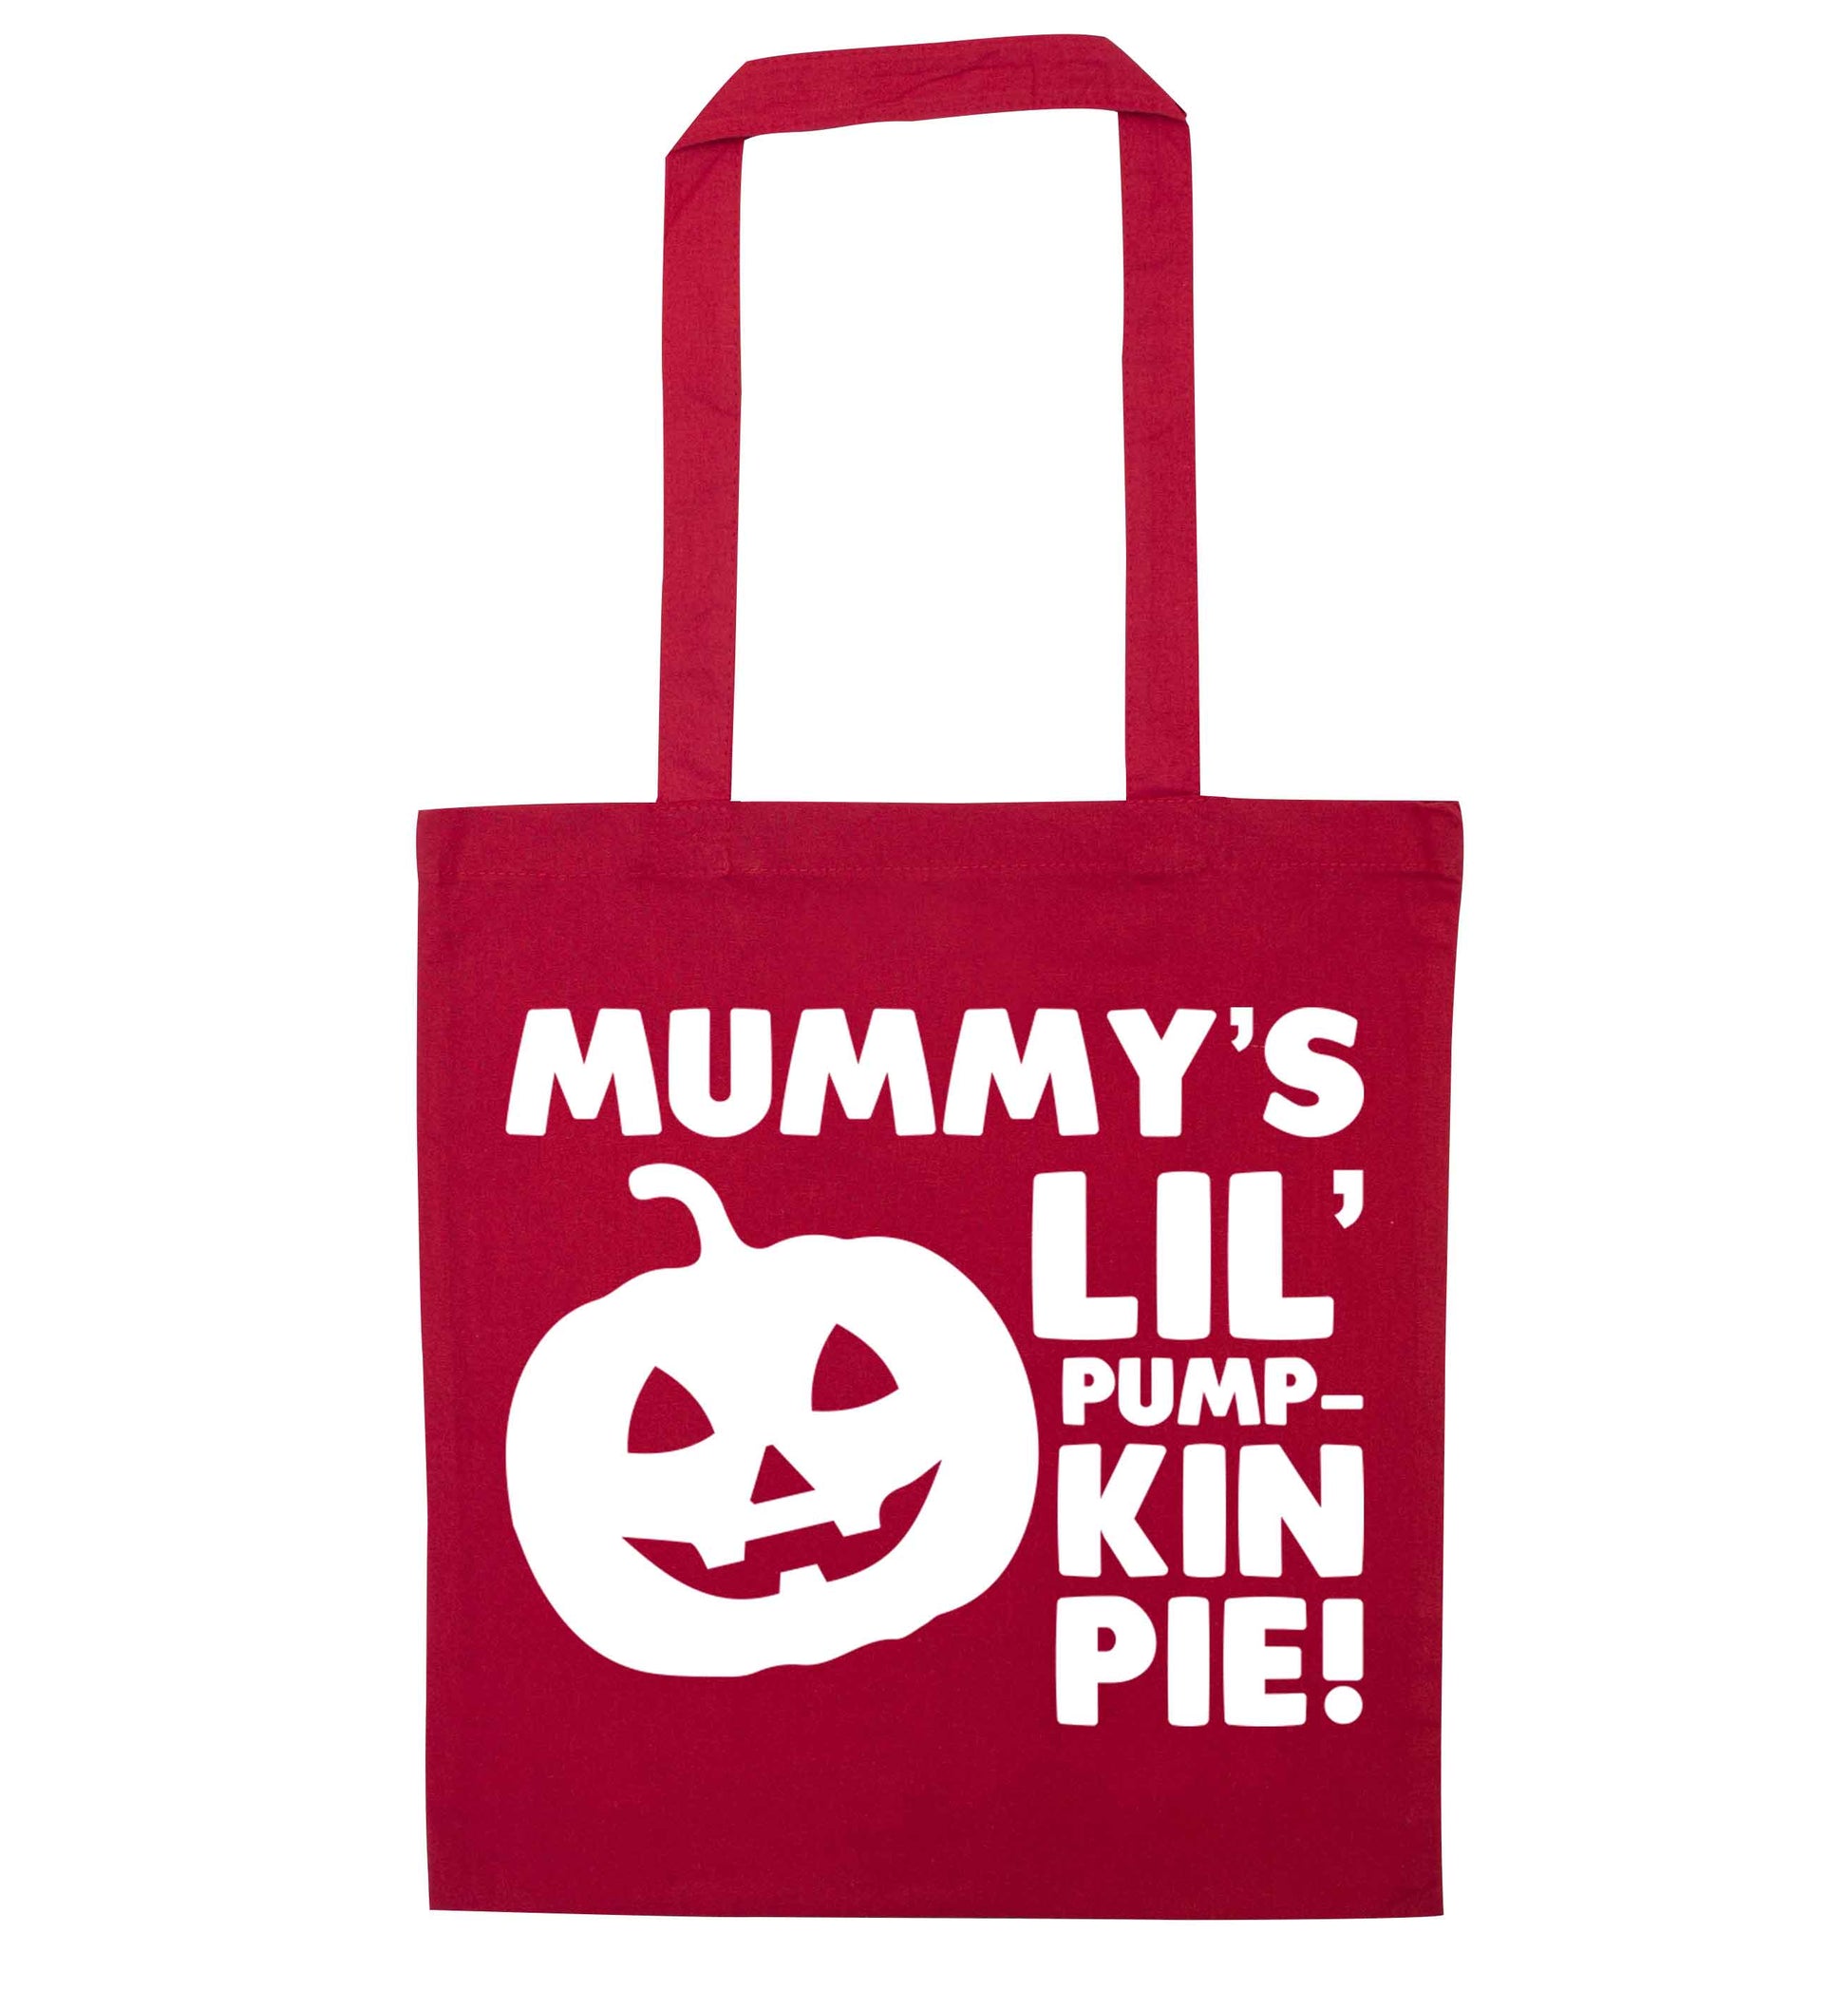 Mummy's lil' pumpkin pie red tote bag